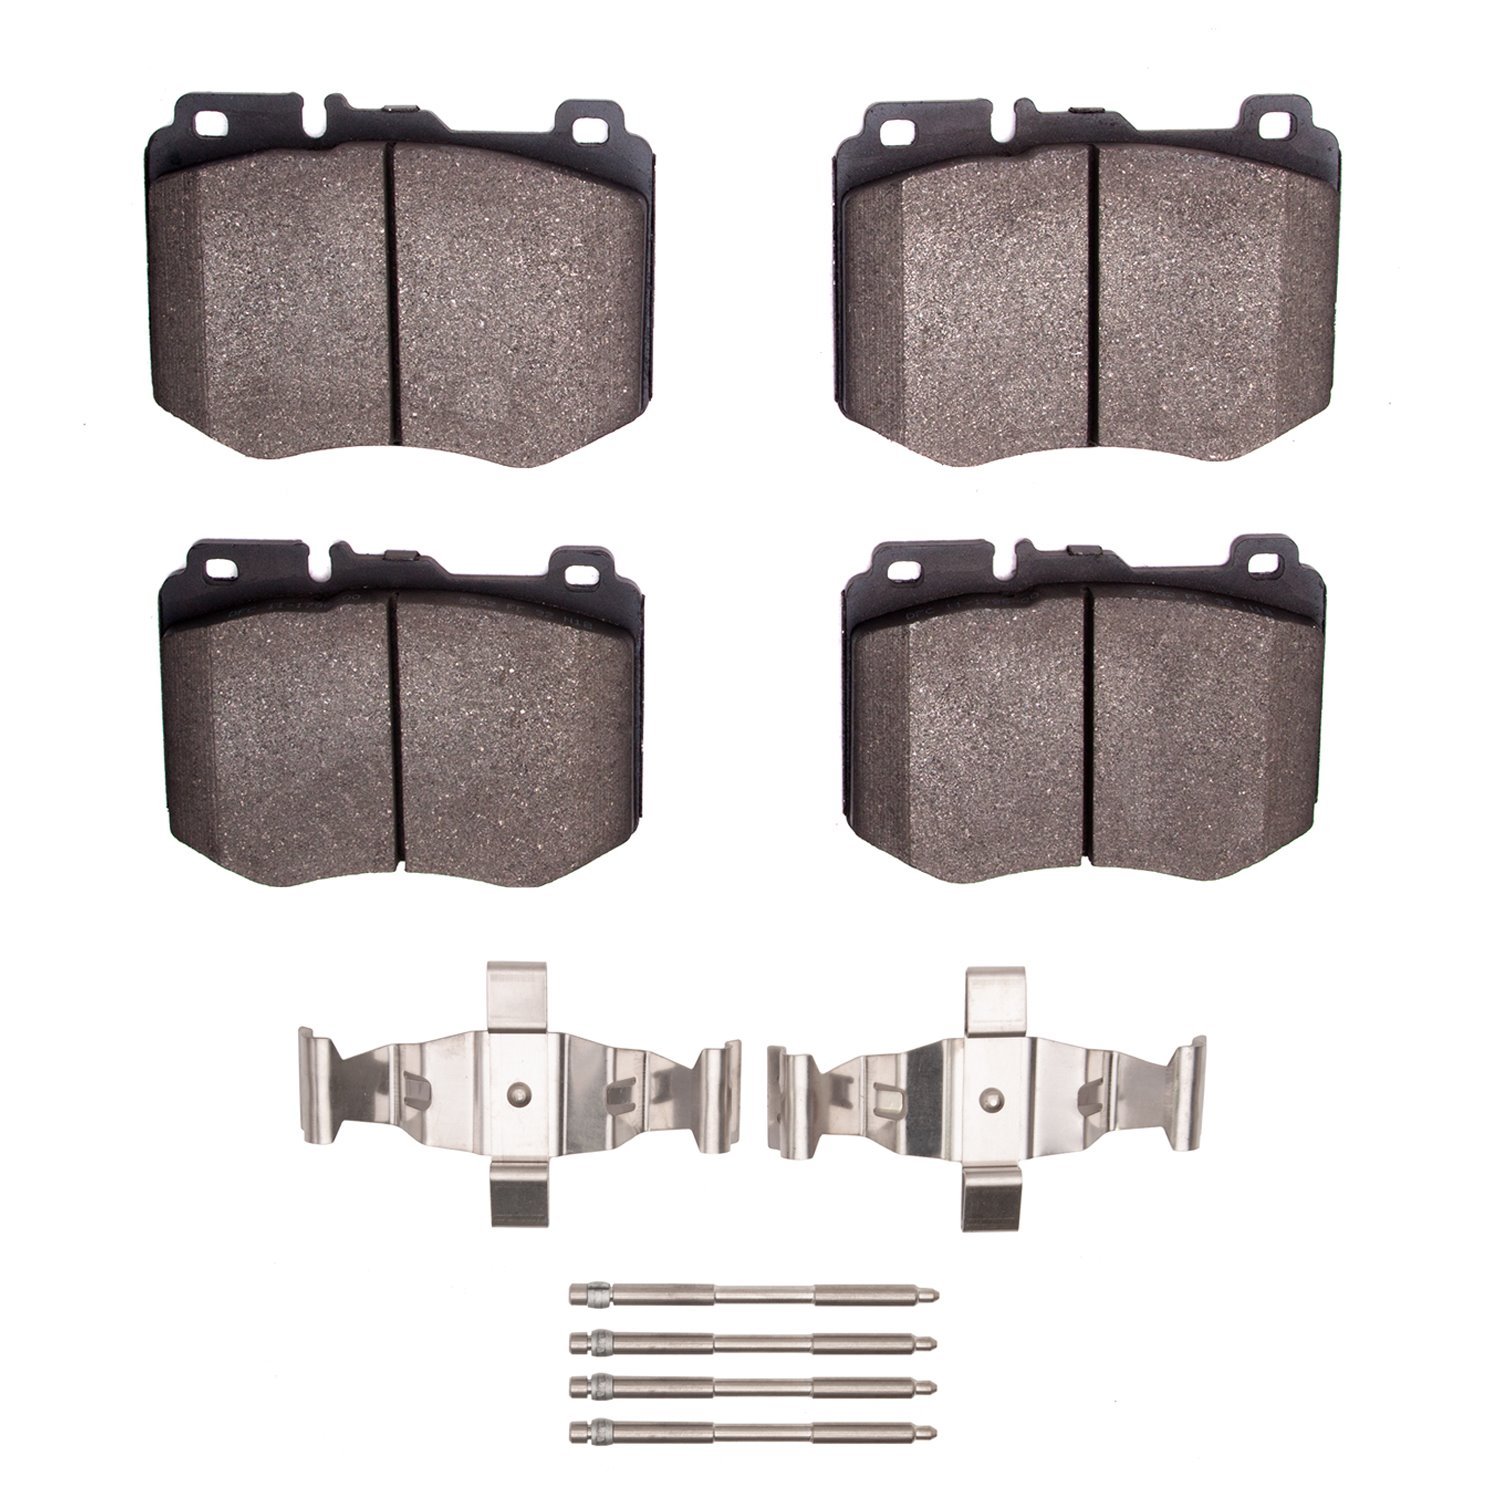 1310-1796-01 3000-Series Ceramic Brake Pads & Hardware Kit, Fits Select Mercedes-Benz, Position: Front